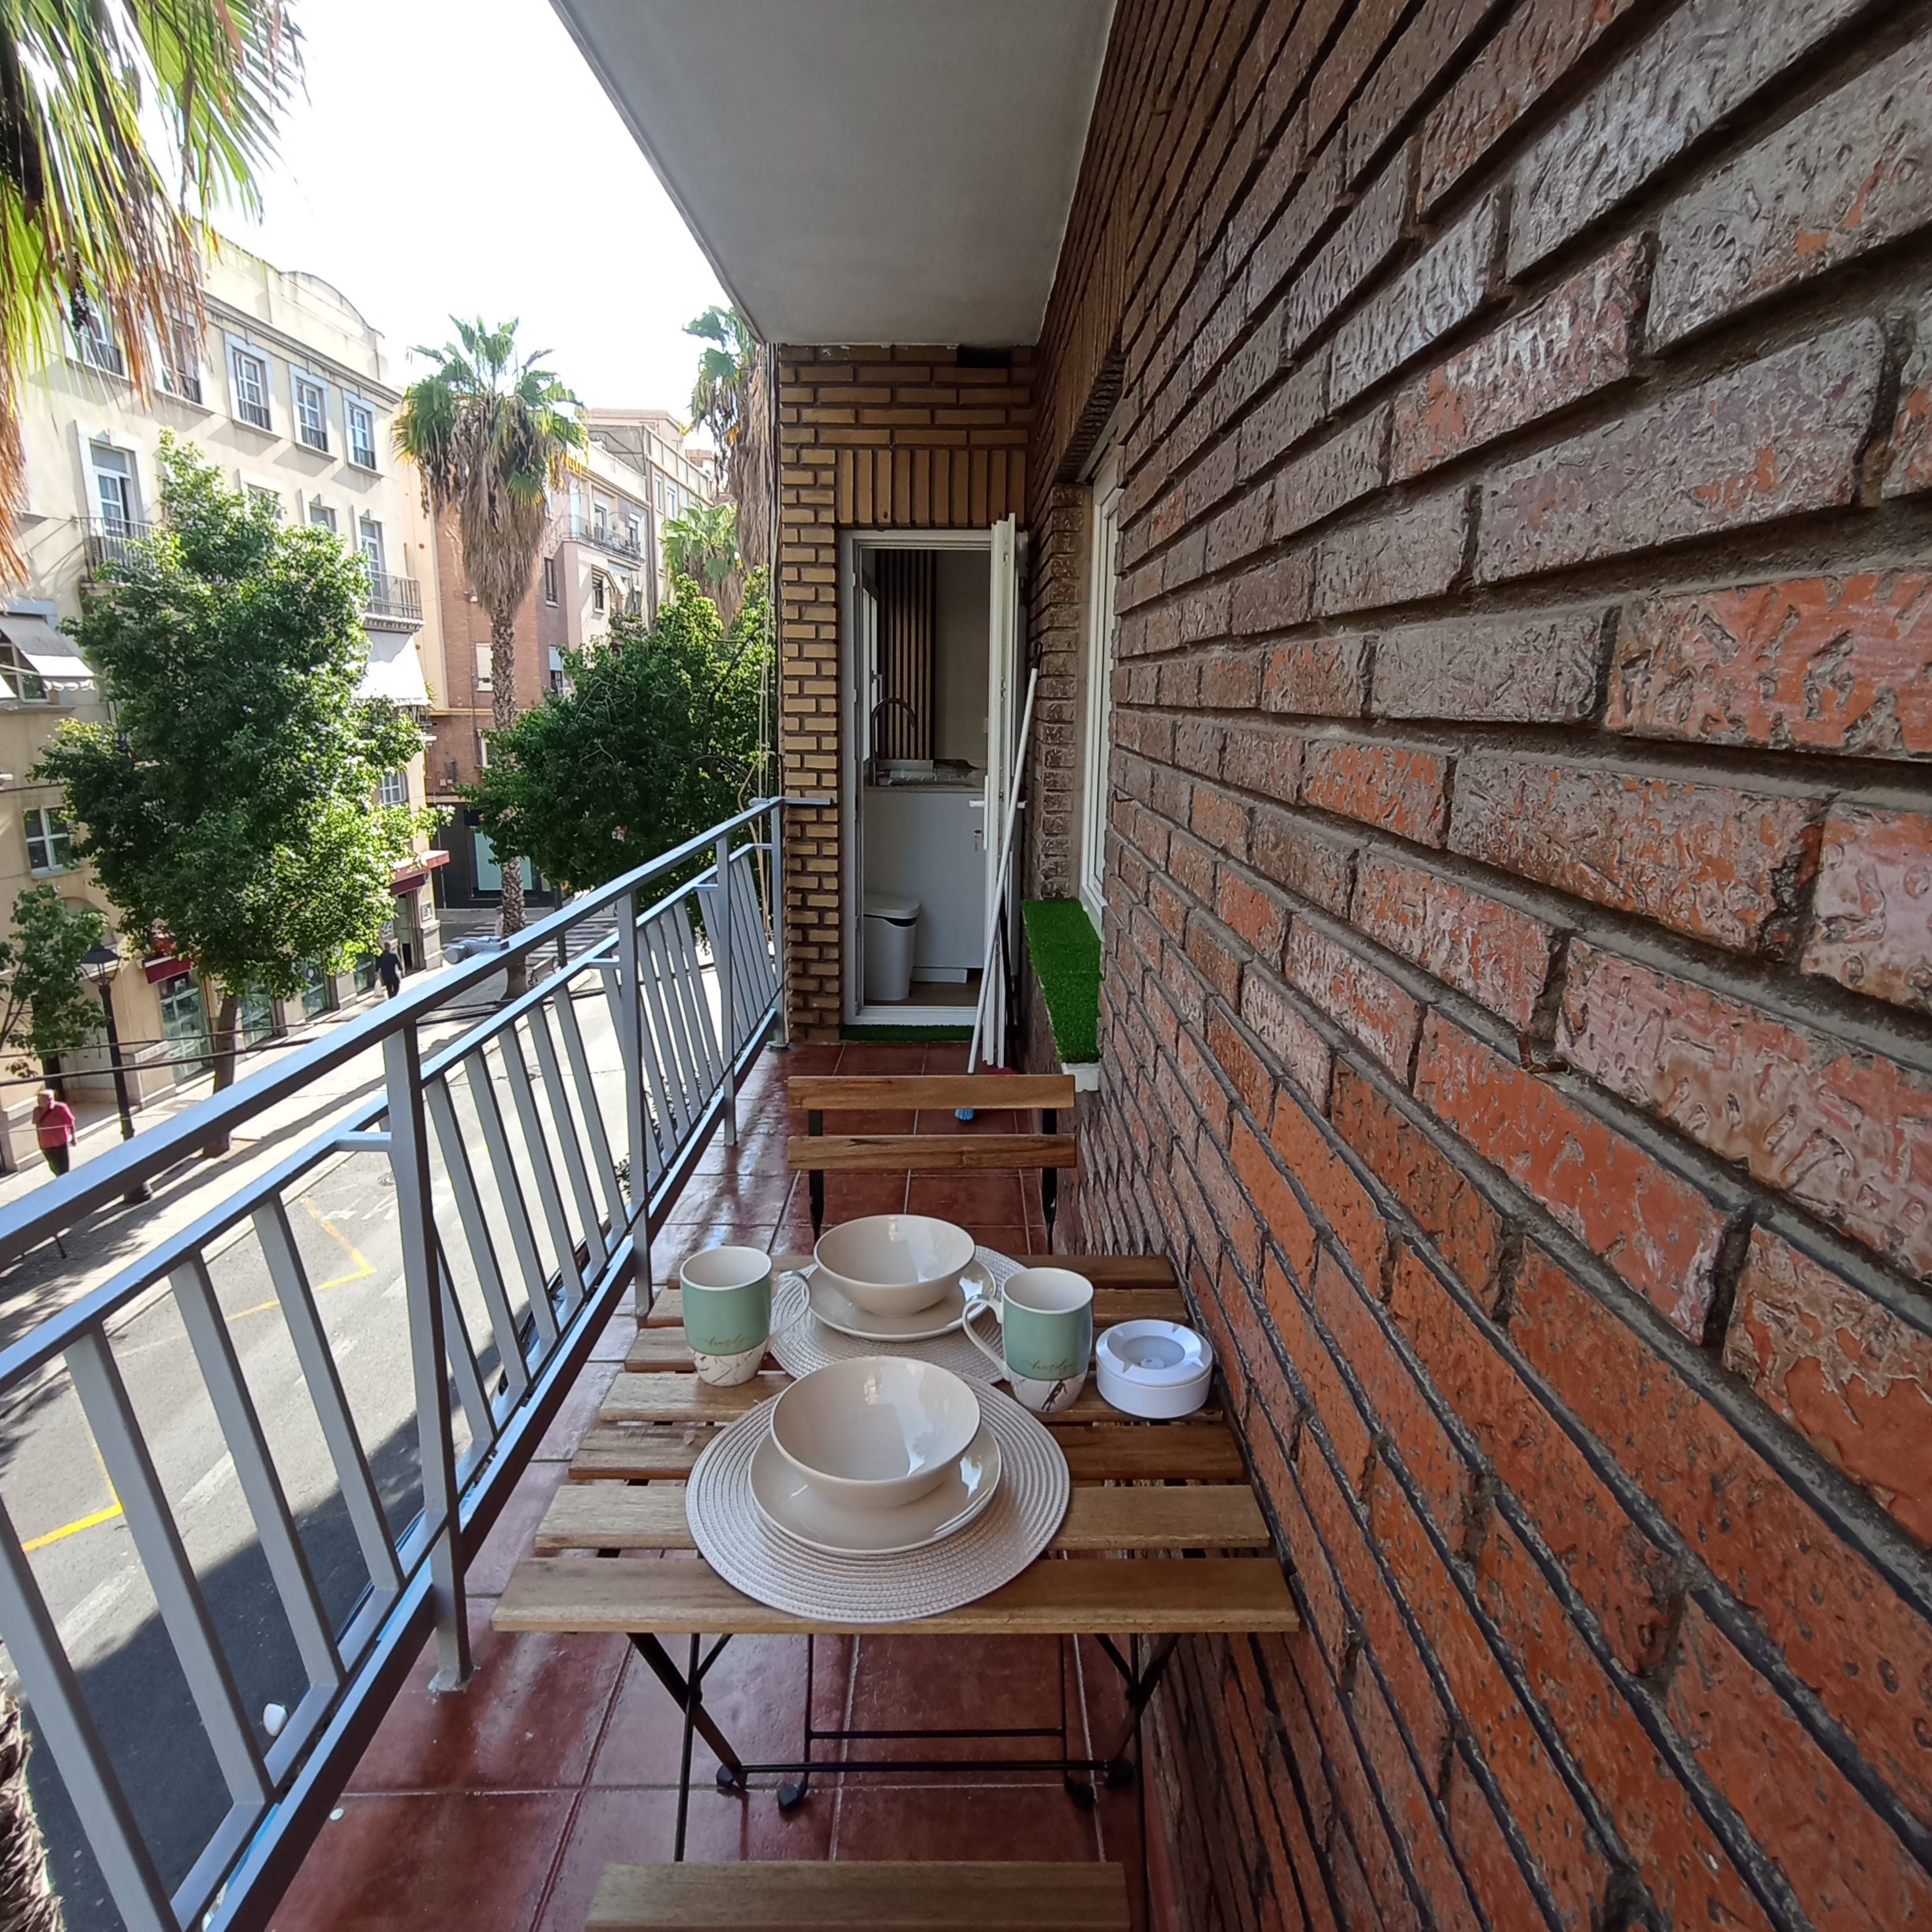 Trafalgar - 3 Bedroom apartment for rent in Valencia balcony 4